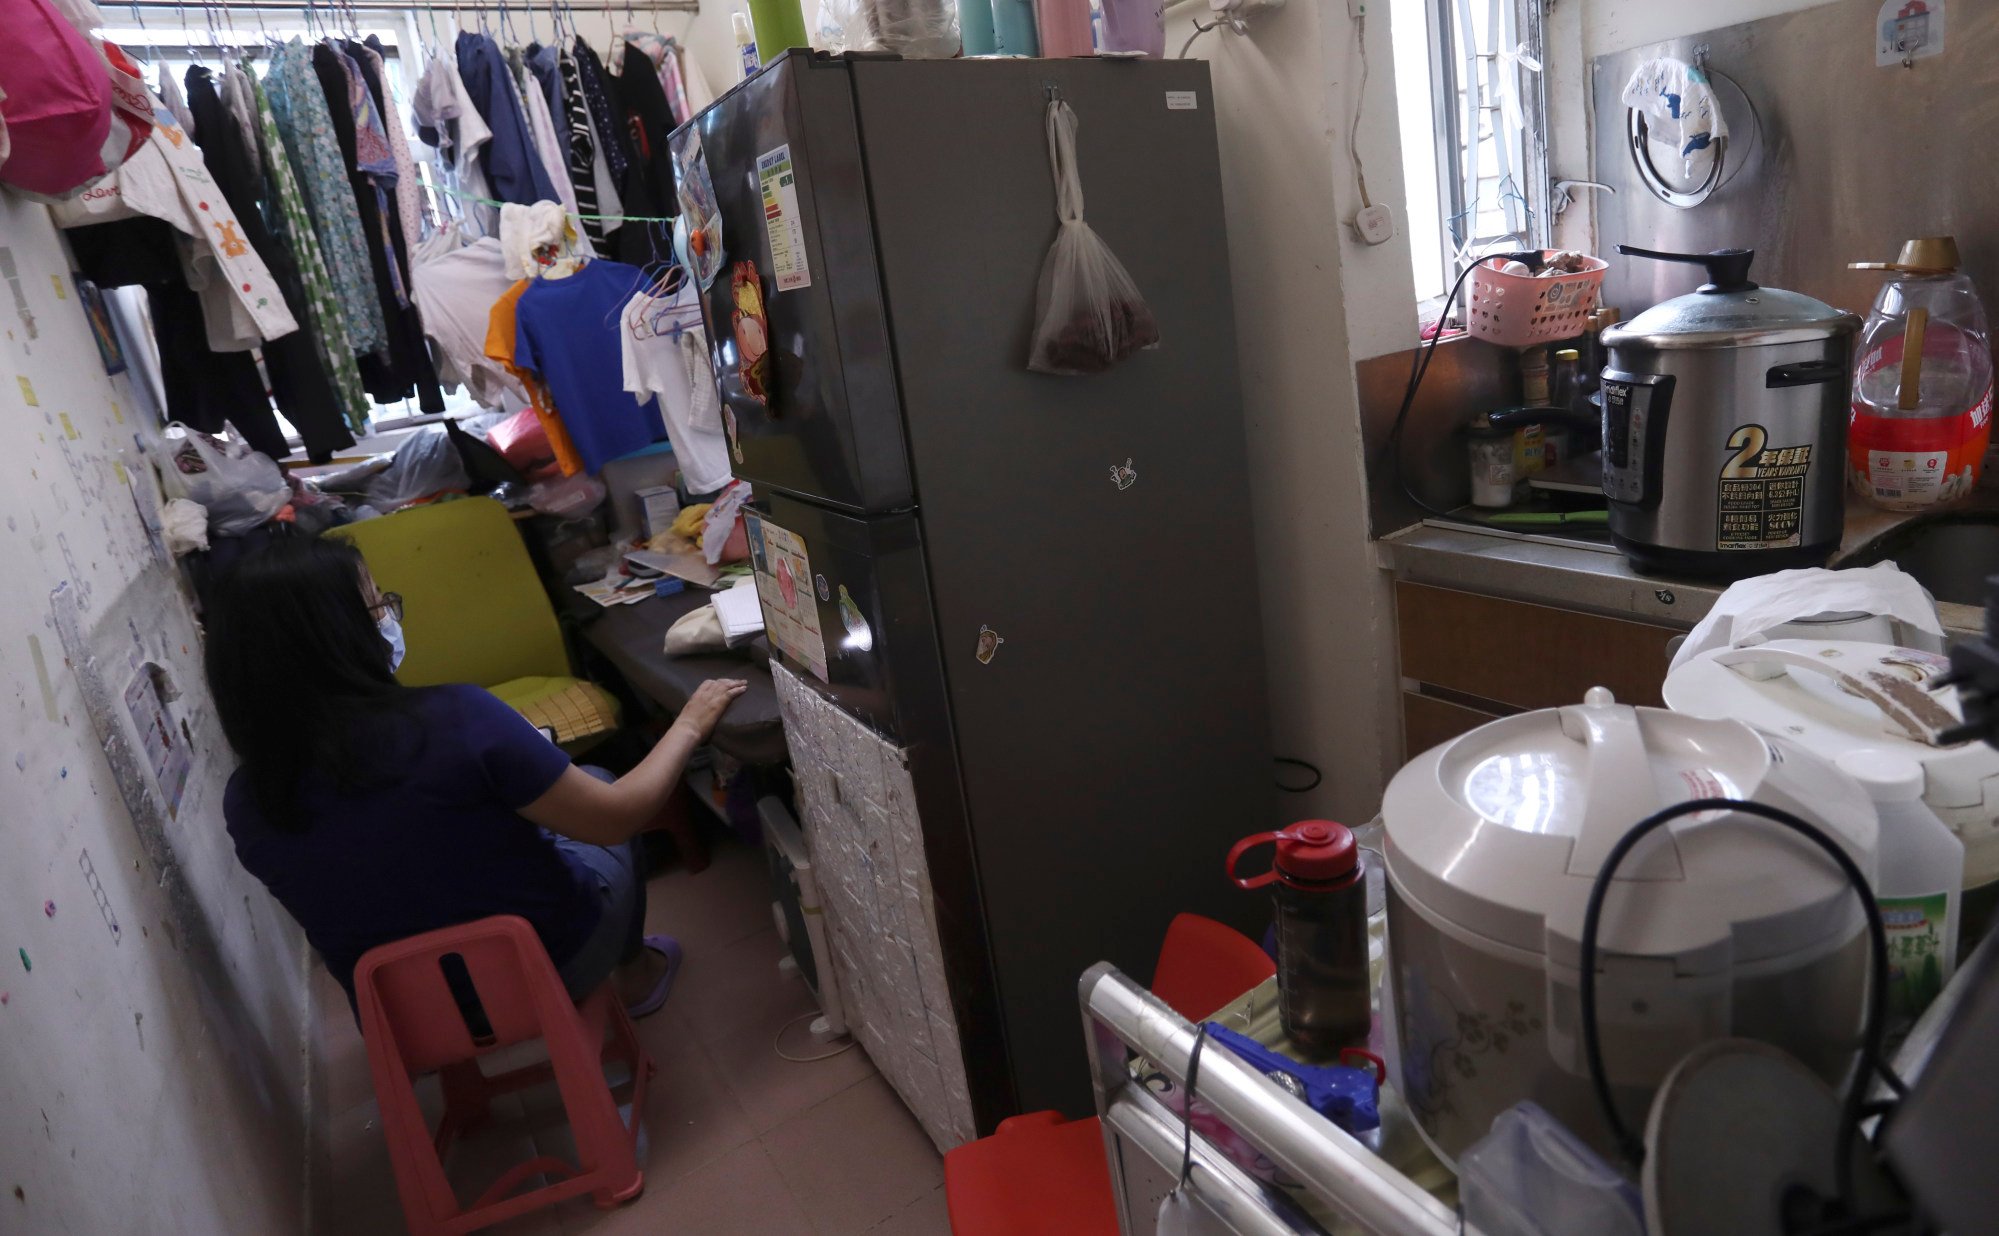 Siumei at her subdivided flat in Mong Kok. Photo: Jonathan Wong